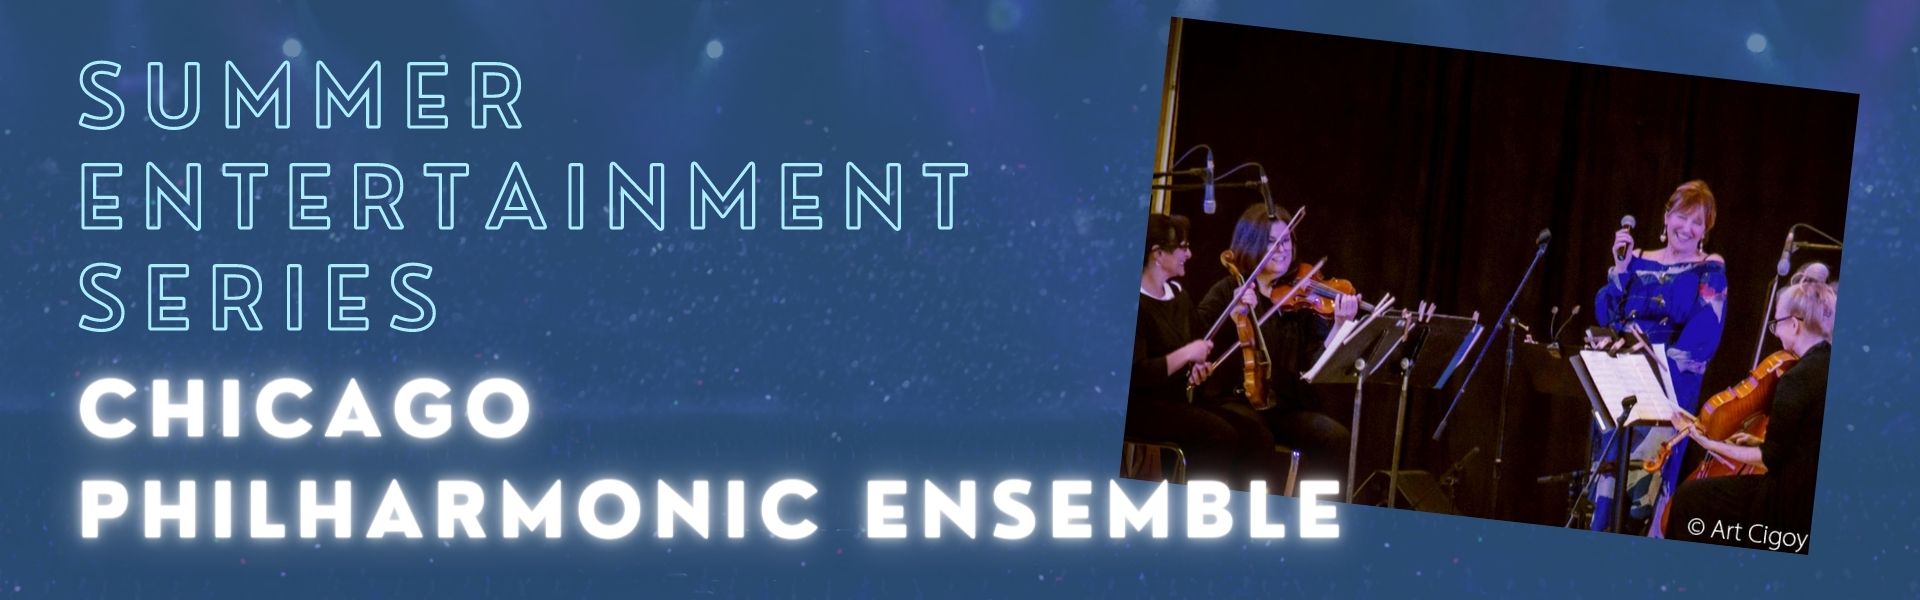 Summer Entertainment Series: Chicago Philharmonic Ensemble